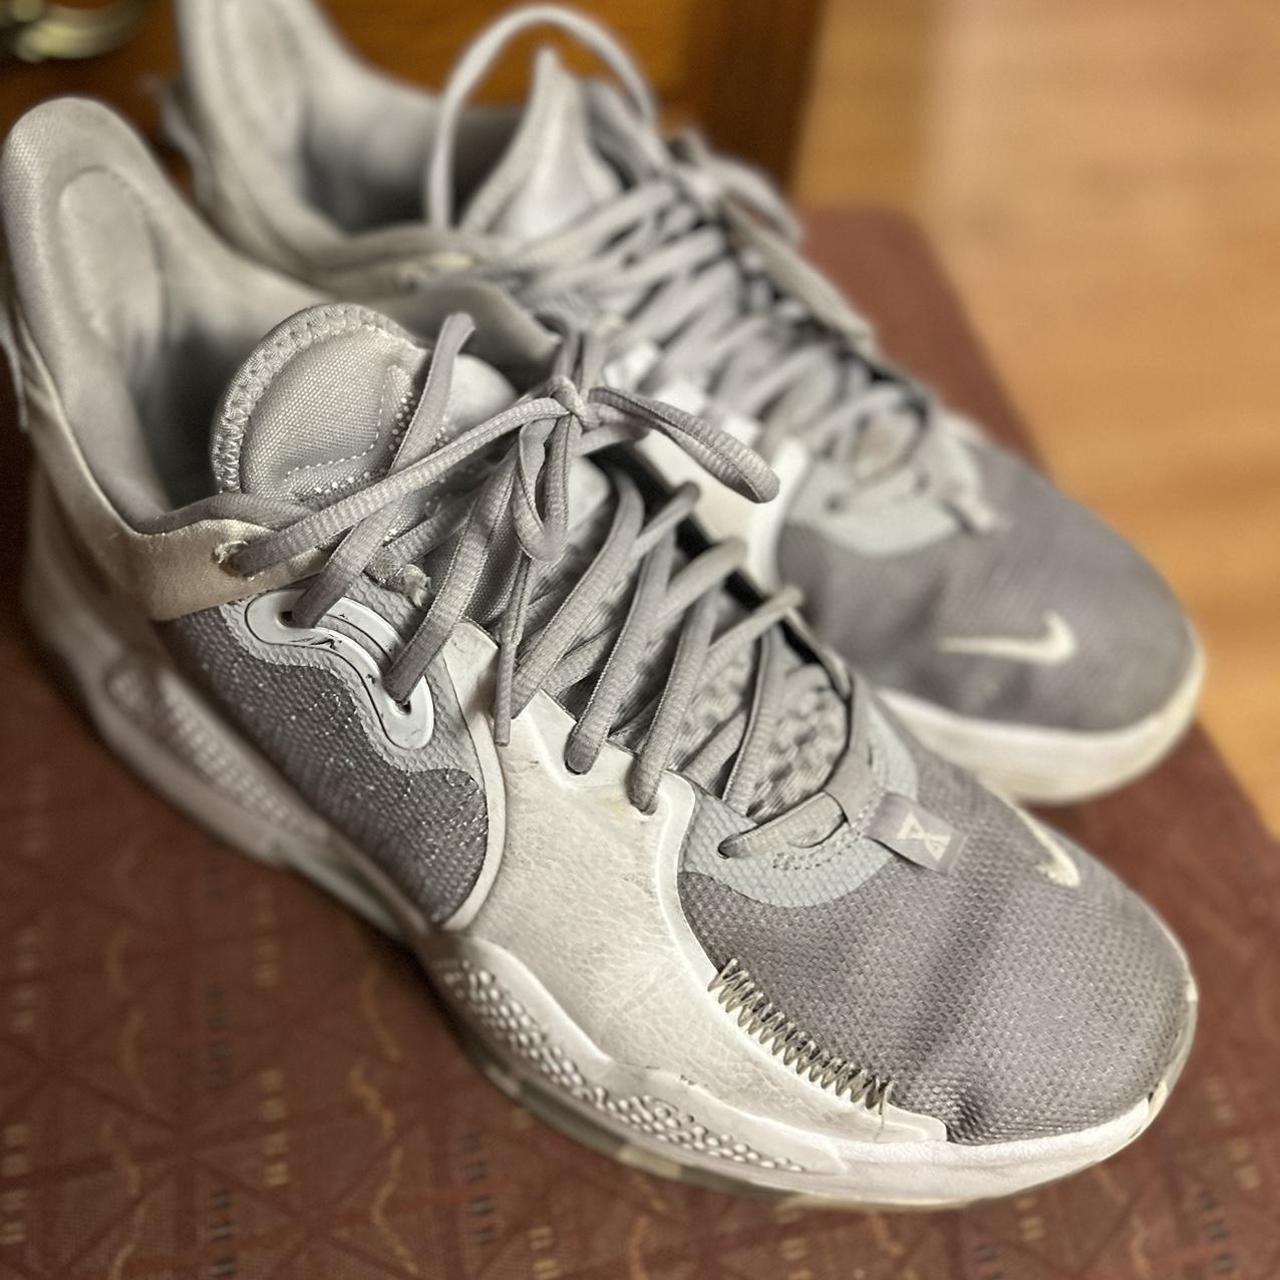 Nike Paul George Basketball Shoes Sneakers